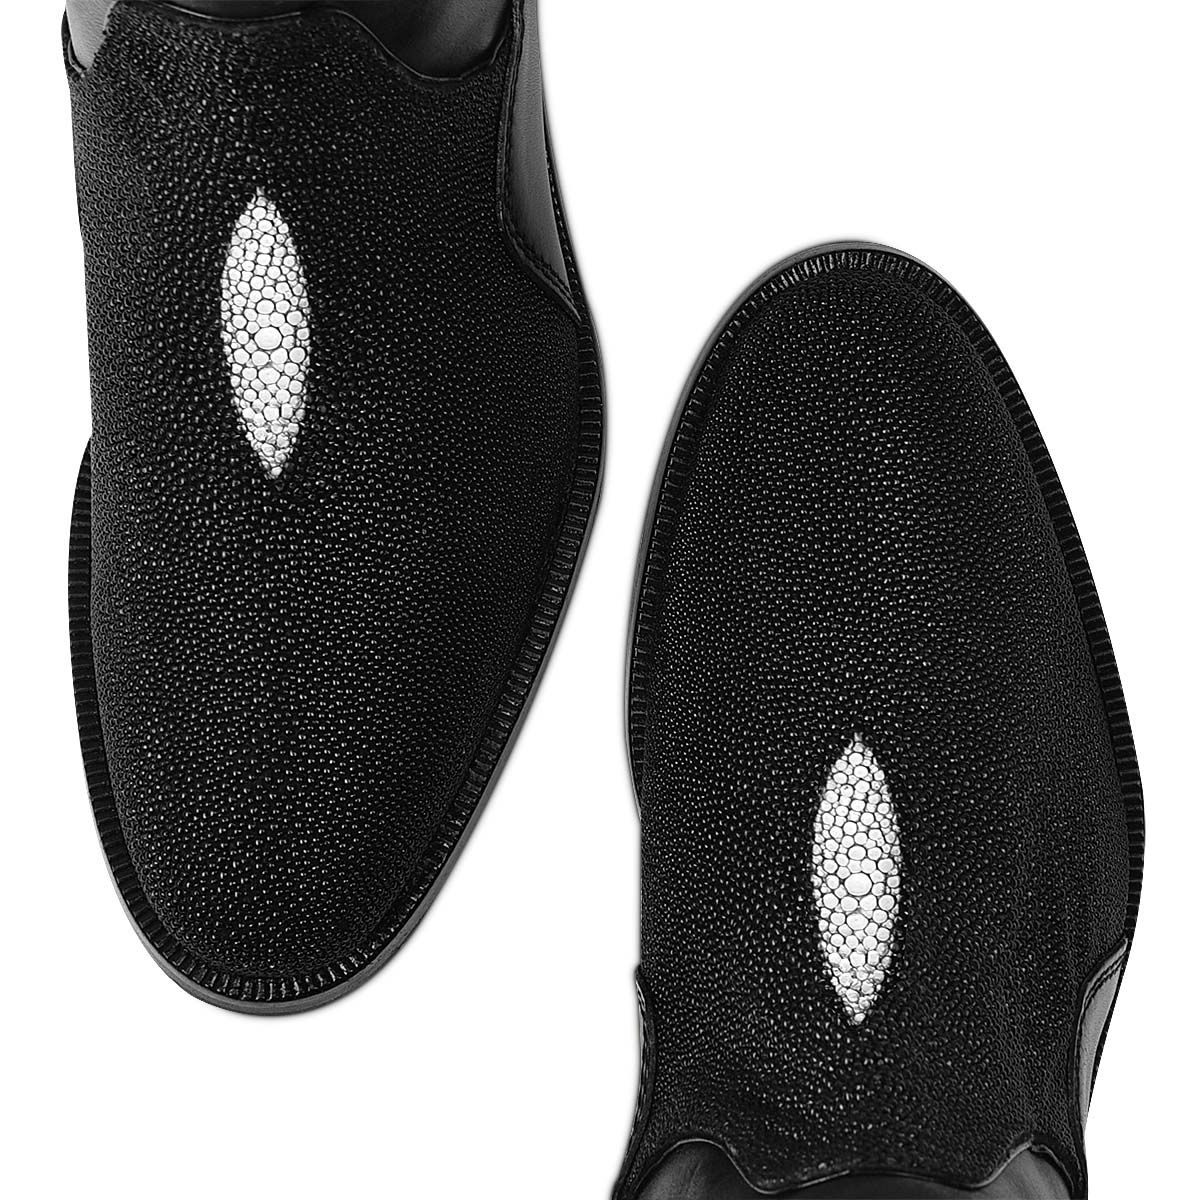 98TMTTS - Franco Cuadra black casual stingray leather riding boots for women-Kuet.us